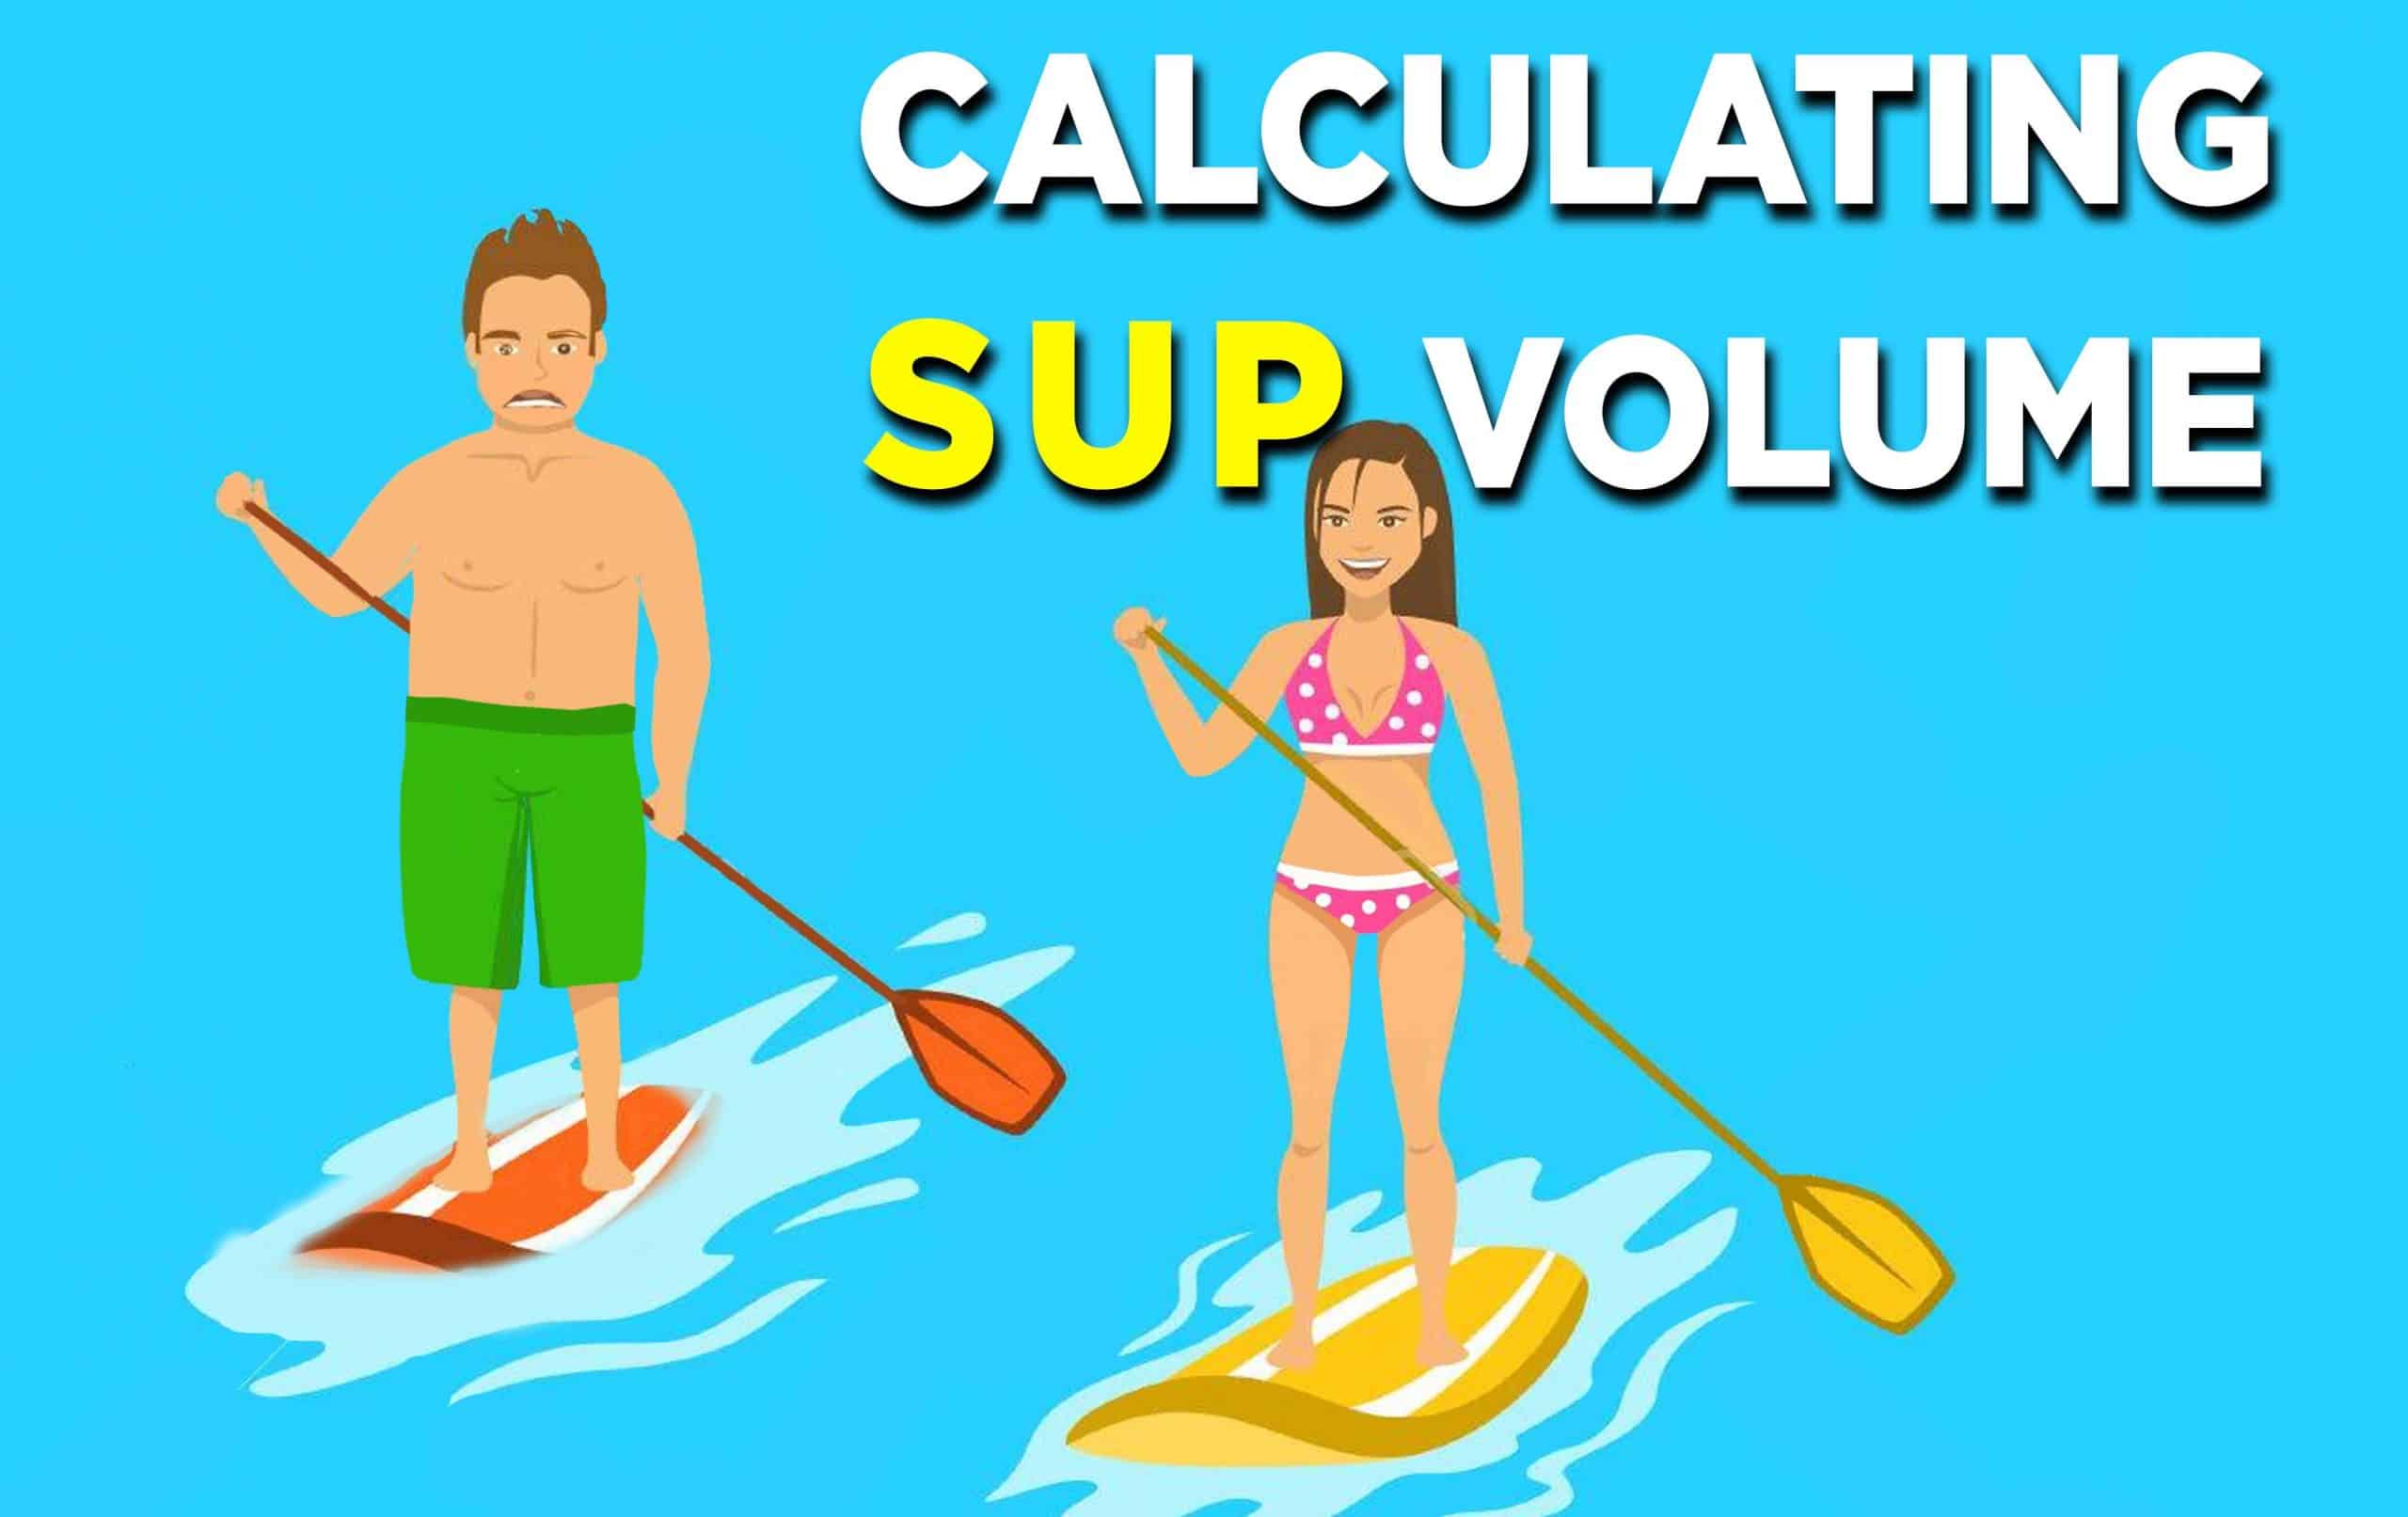 metodología Humano transportar How To Calculate Sup Volume - SBSboards